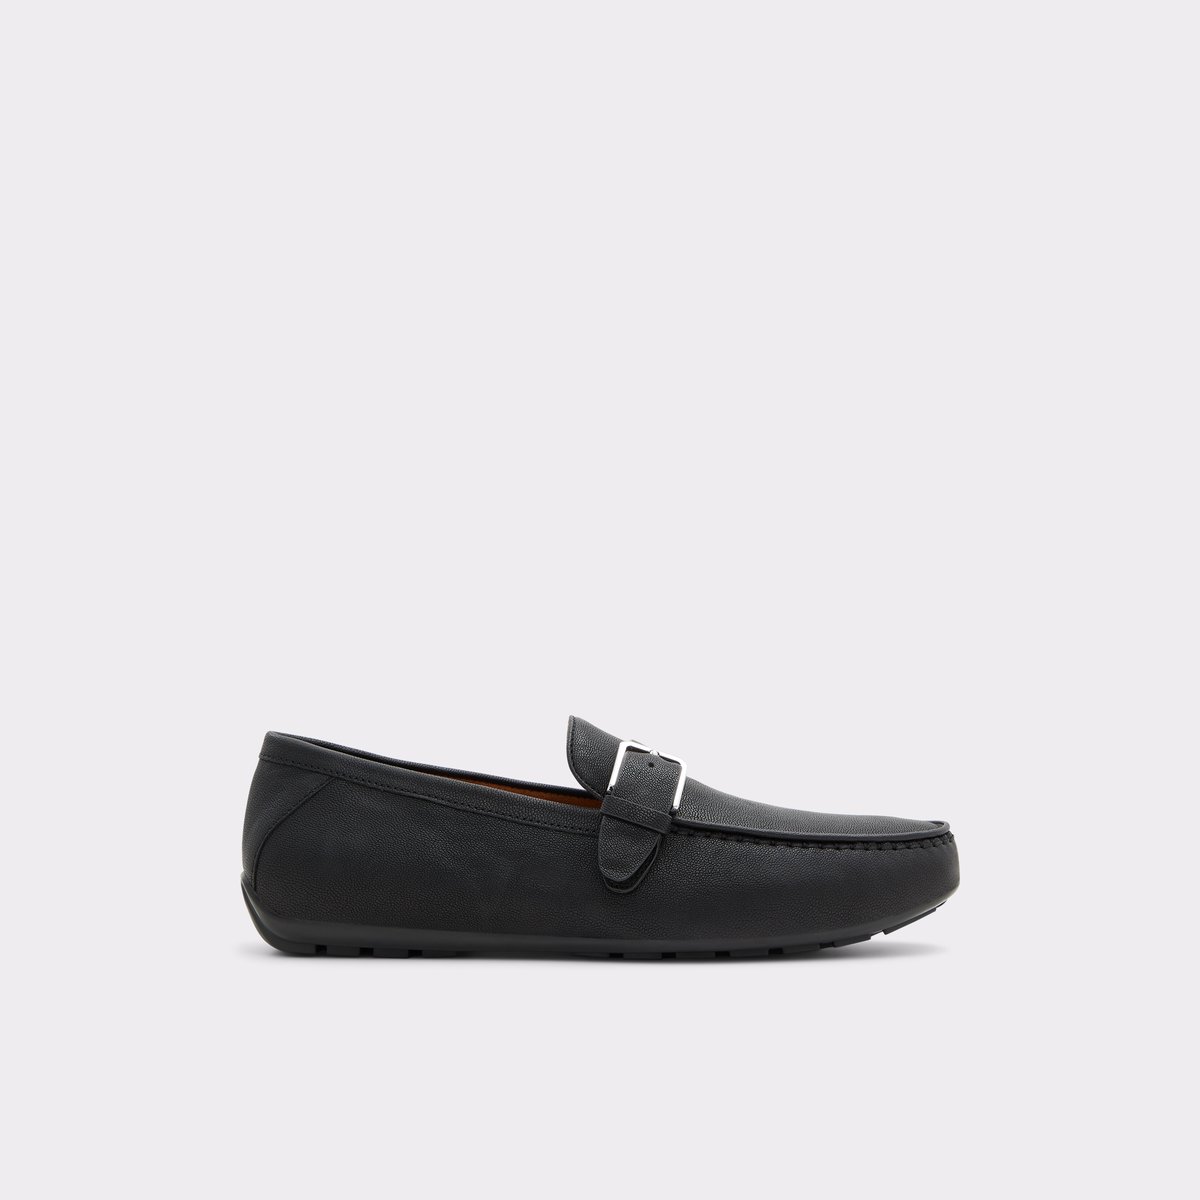 Reggio Black Men's Casual Shoes | ALDO Canada